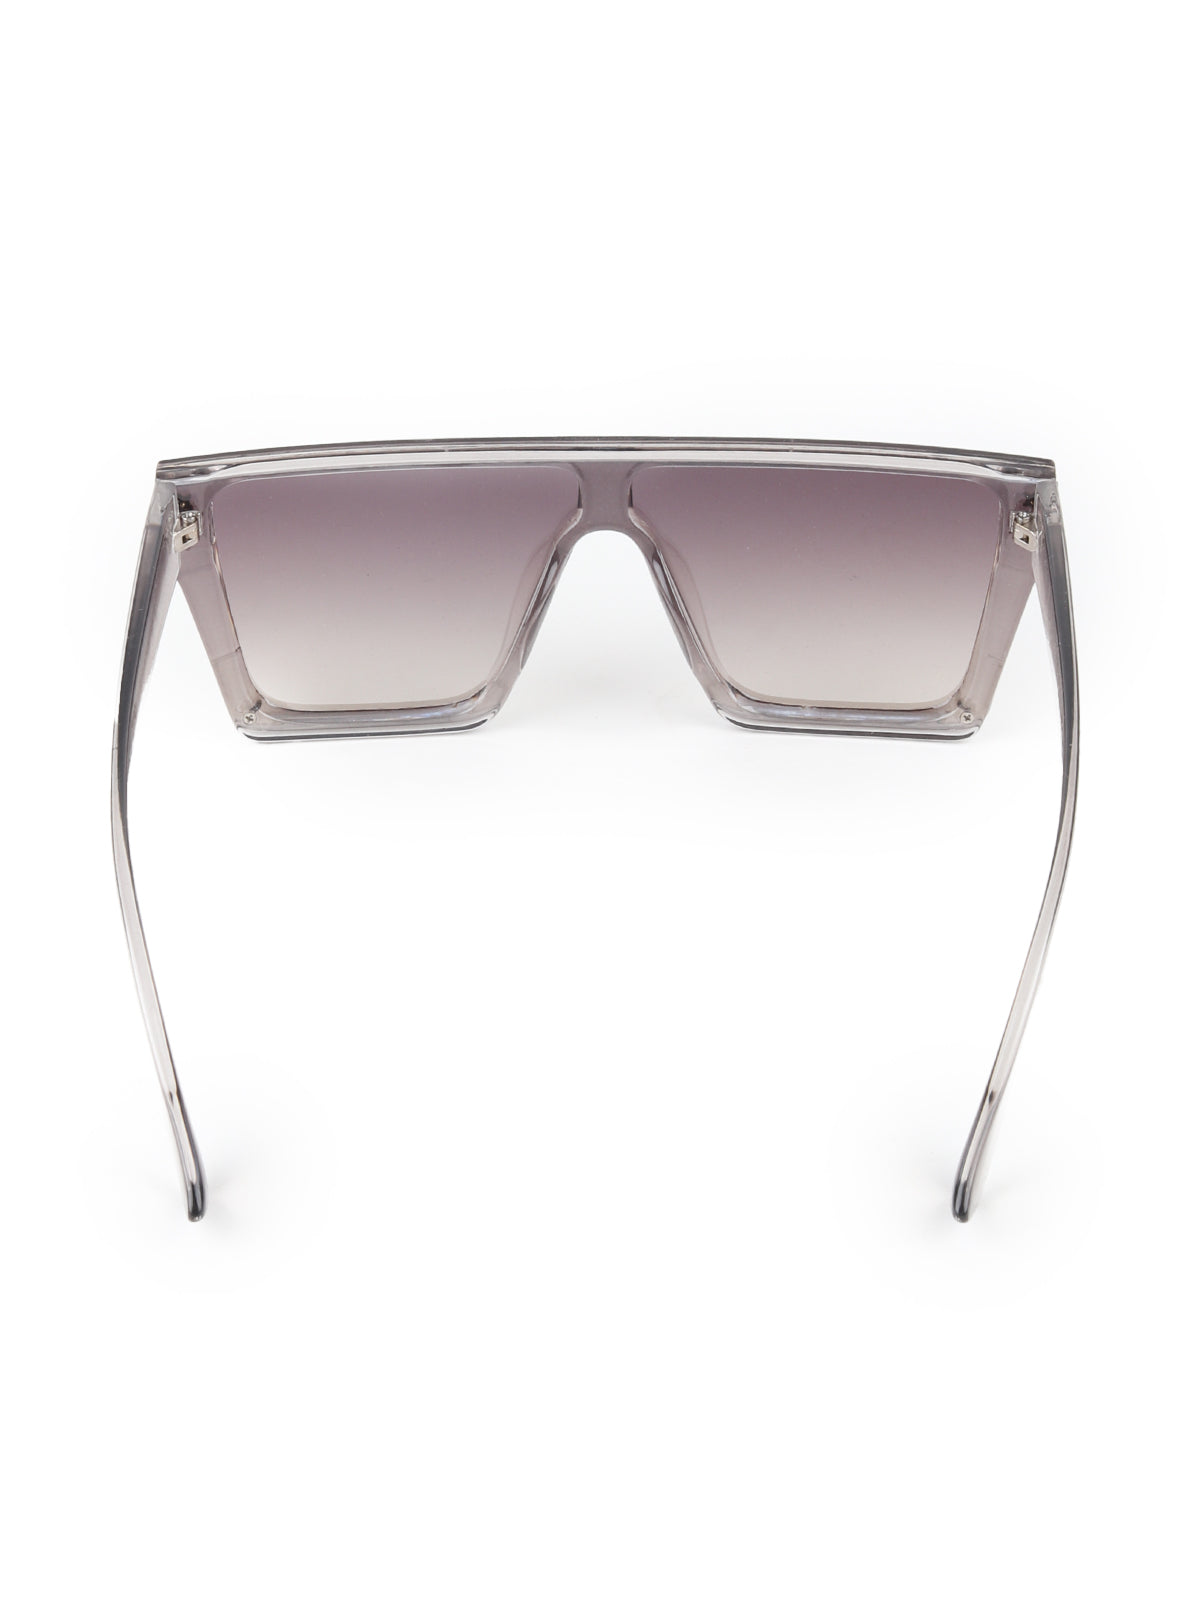 Odette Grey Acrylic Shield Sunglasses for Women